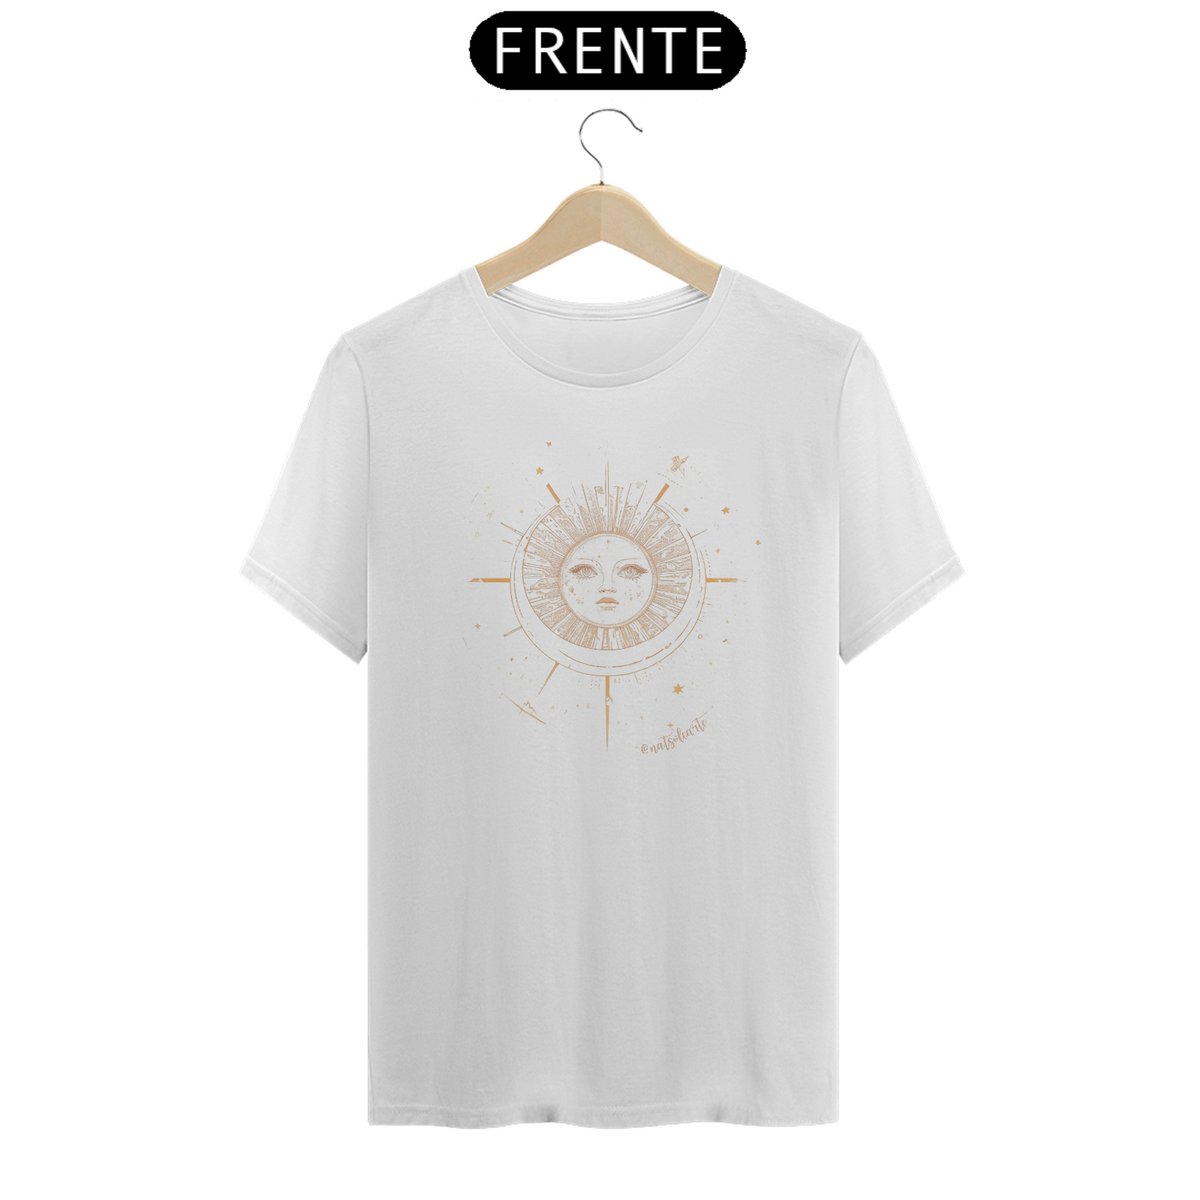 Nome do produto: Camiseta Sol